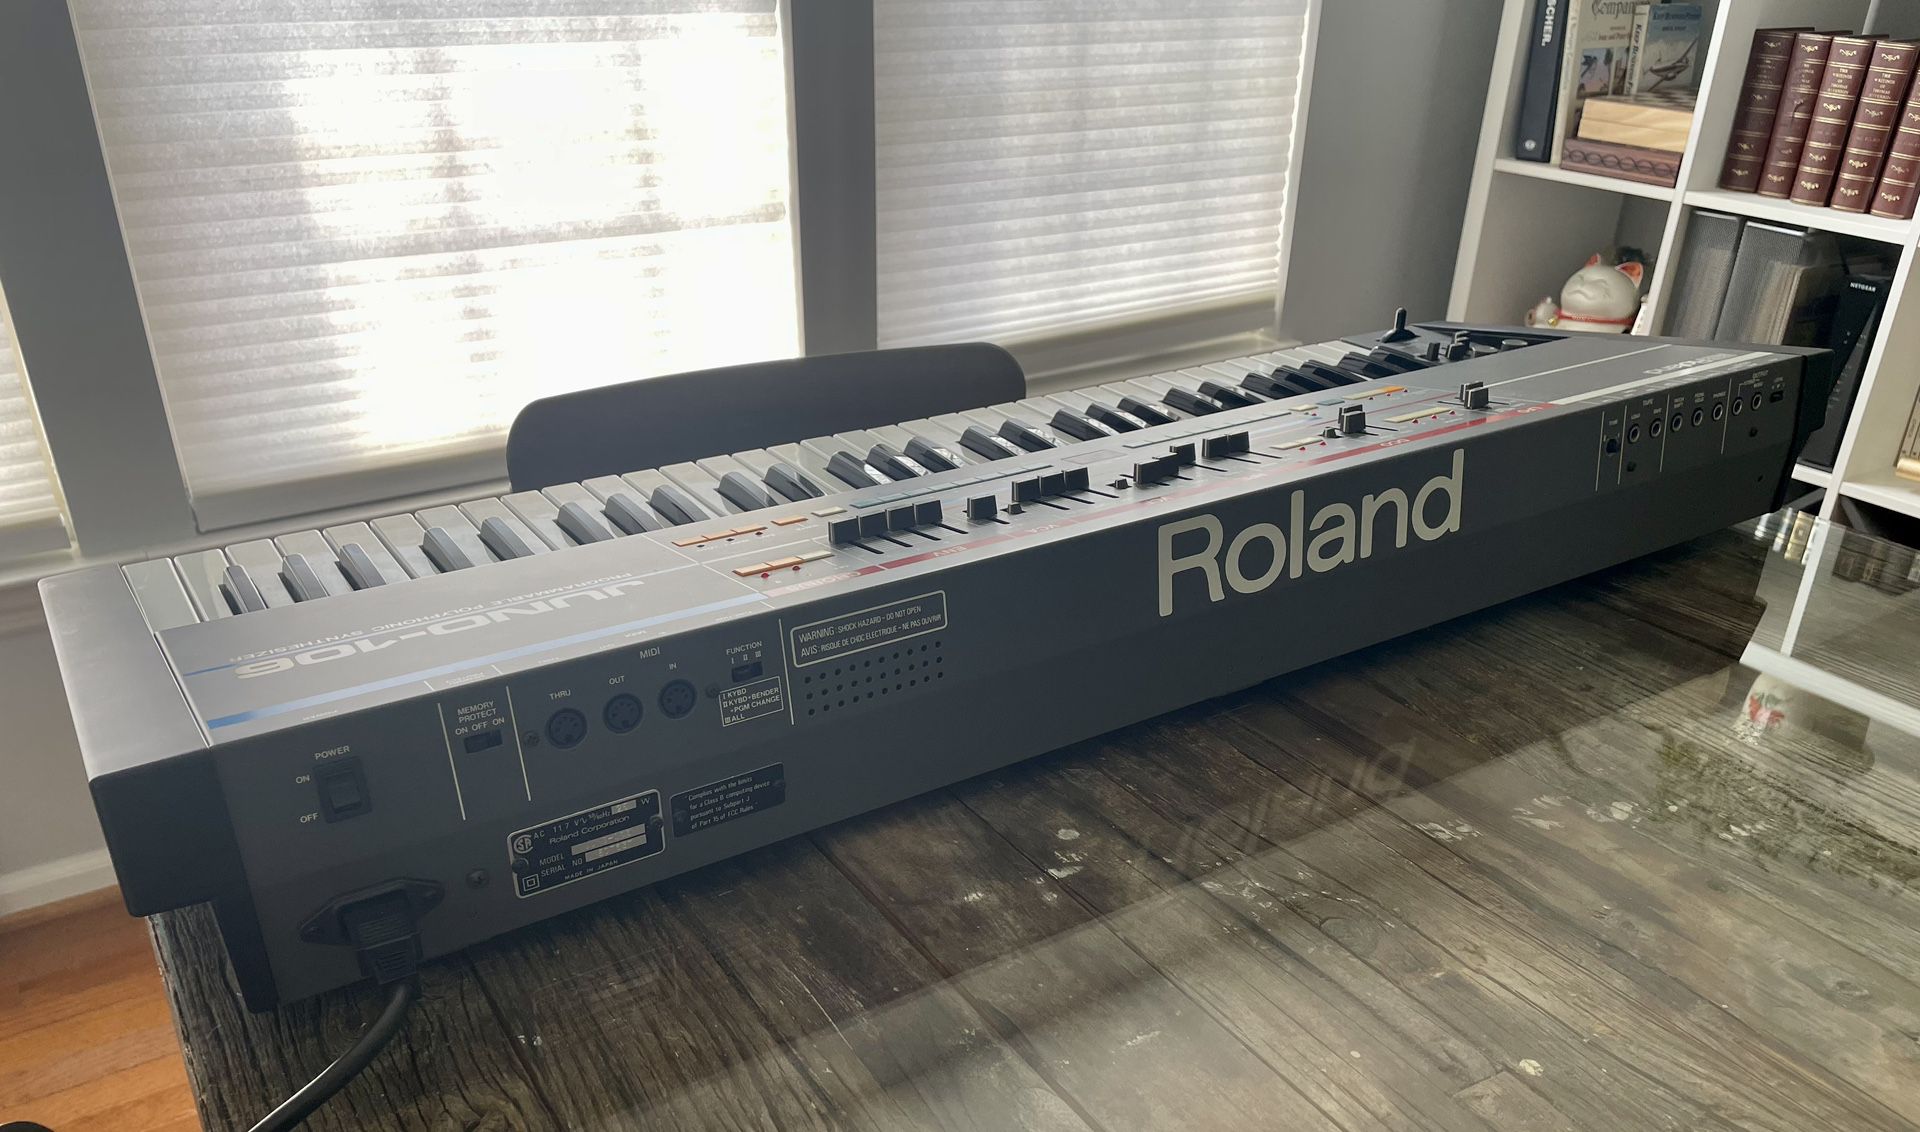 MINT Roland Juno-106 Vintage Poly Synthesizer Keyboard 